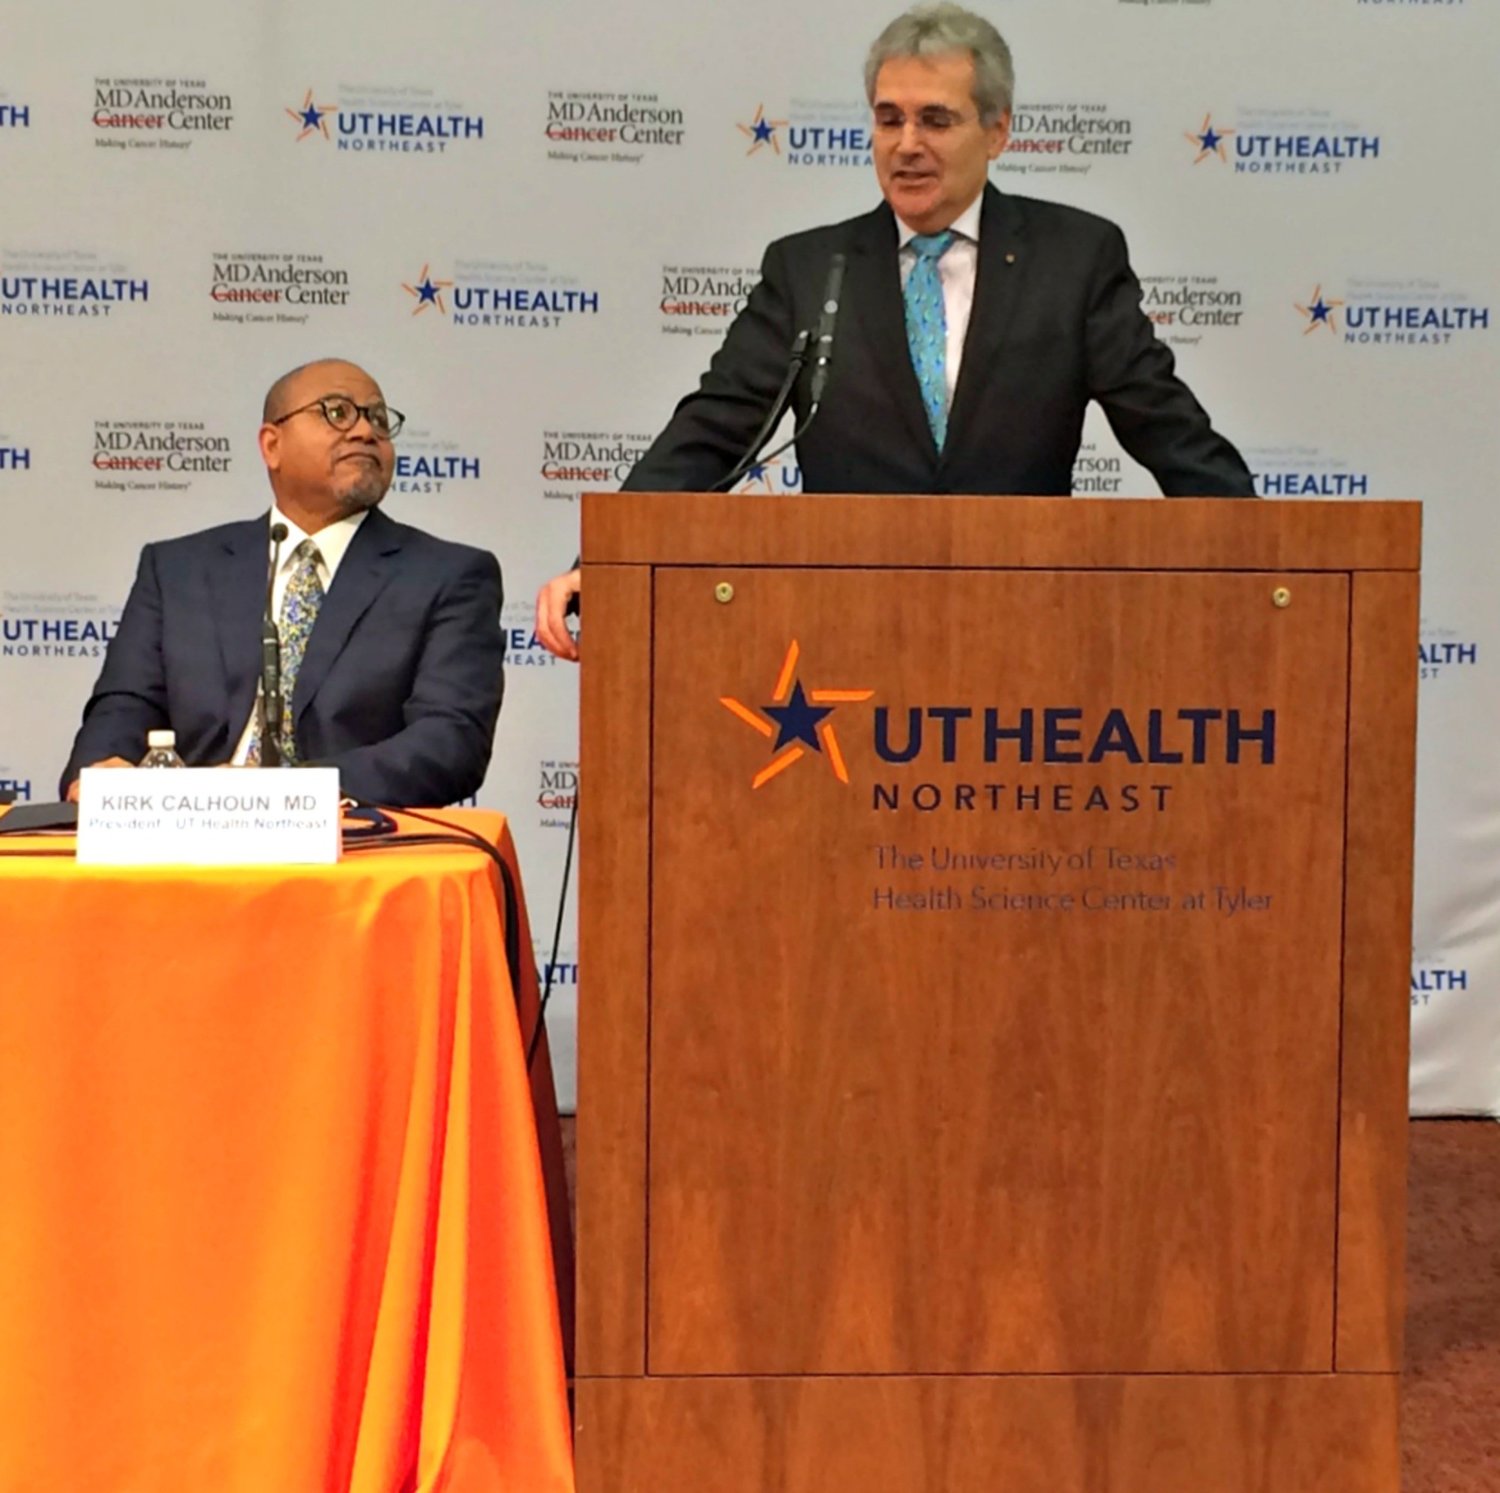 Dr. Ronald DePinho, at podium, discusses MD Anderson partnership with UT Health NE. At left is UT Health NE President Dr. Kirk Calhoun.